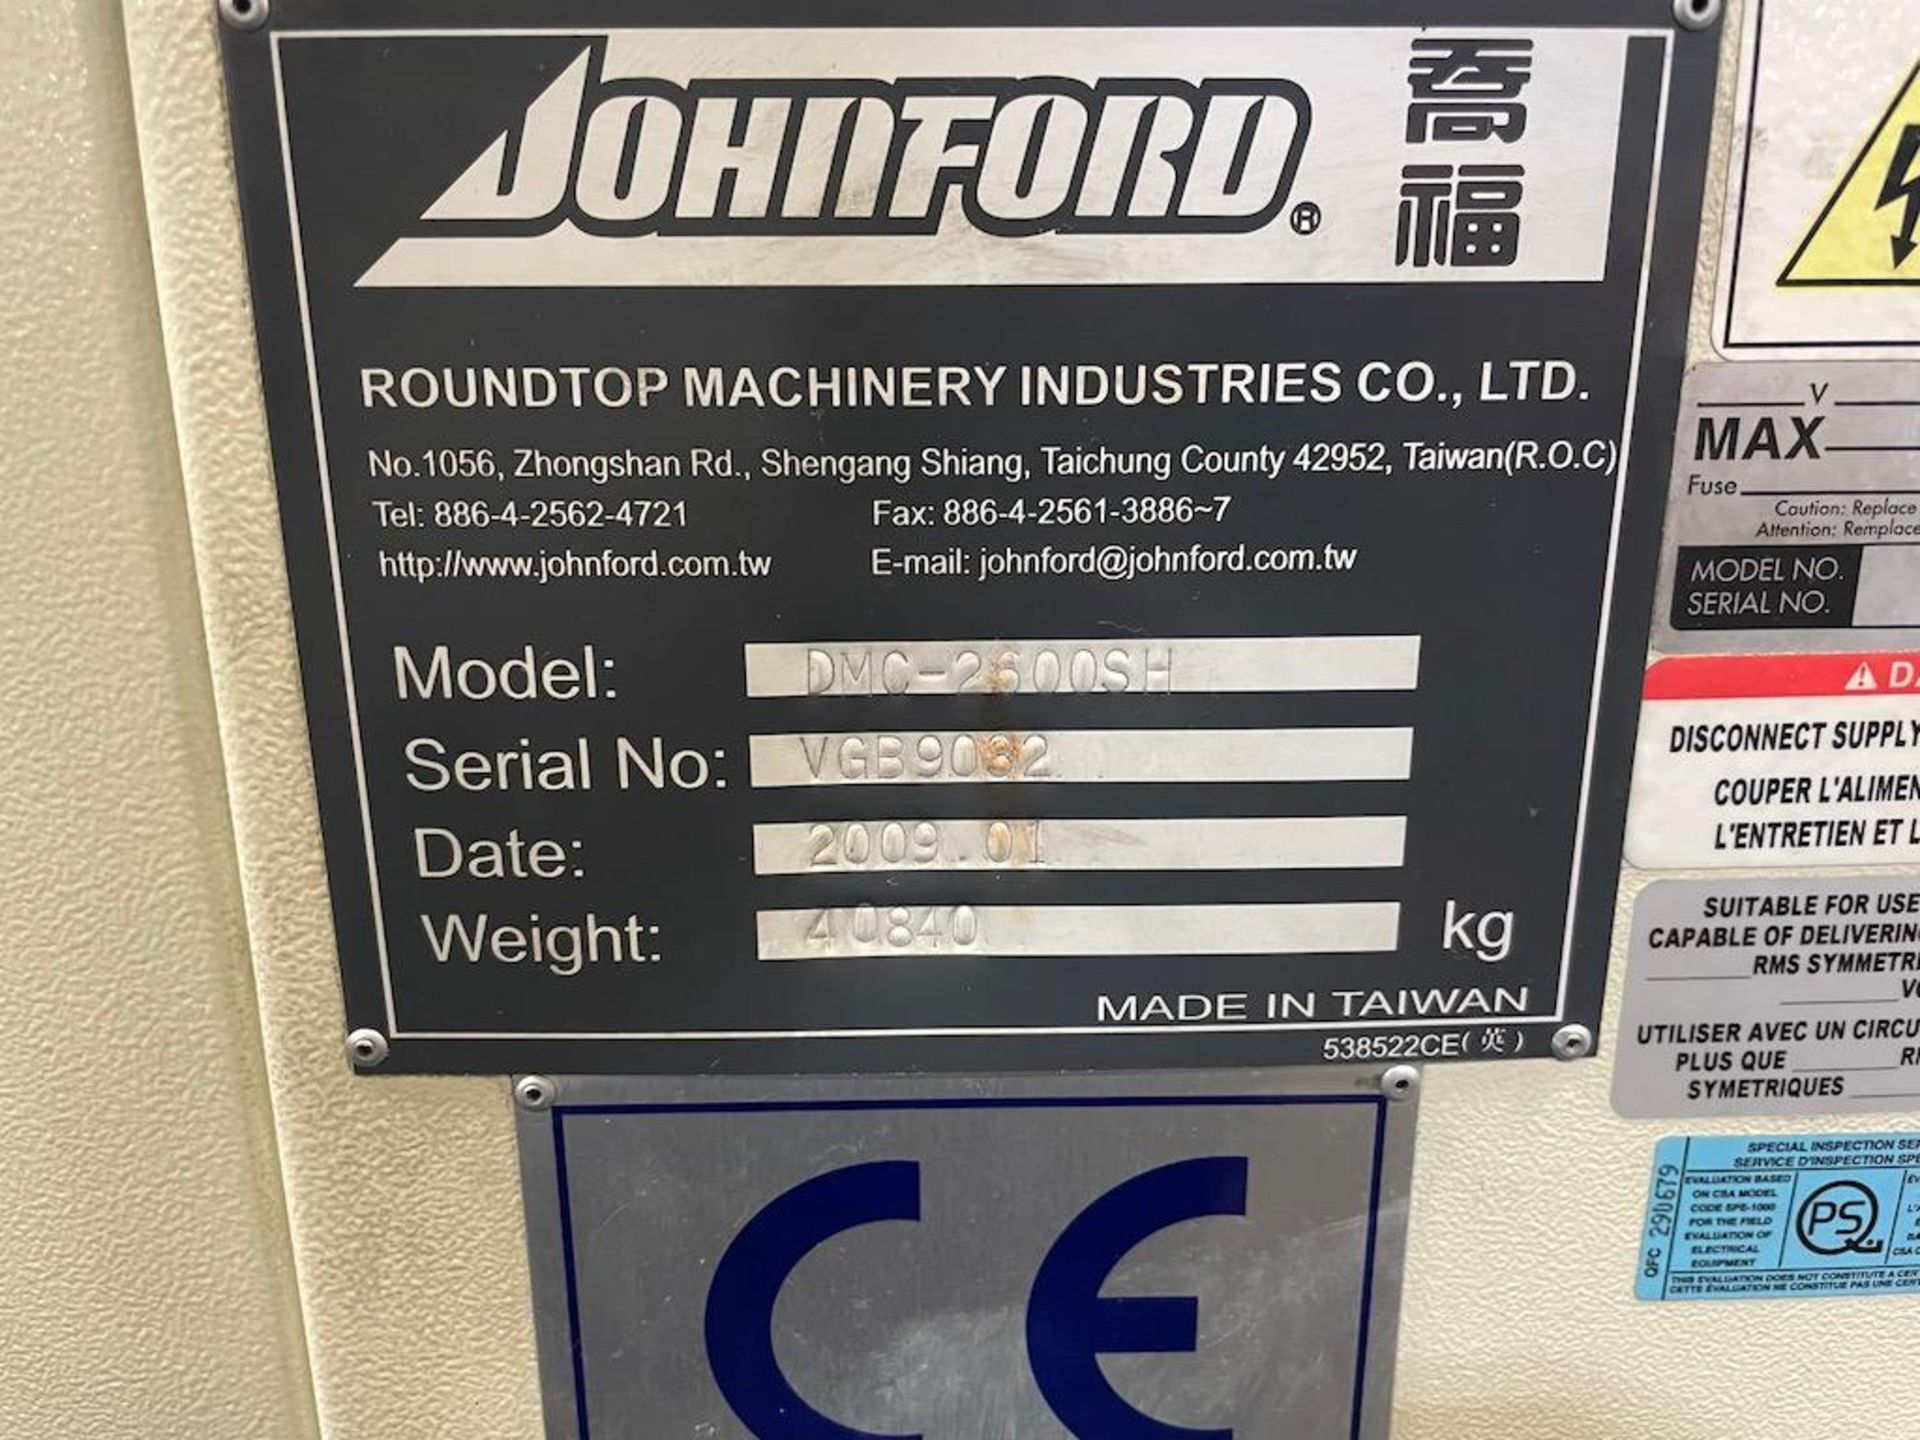 Johnford DMC-2600SH High Speed CNC Double Column Vertical Machining Center, Fanuc 18iMB CNC Control, - Image 16 of 16